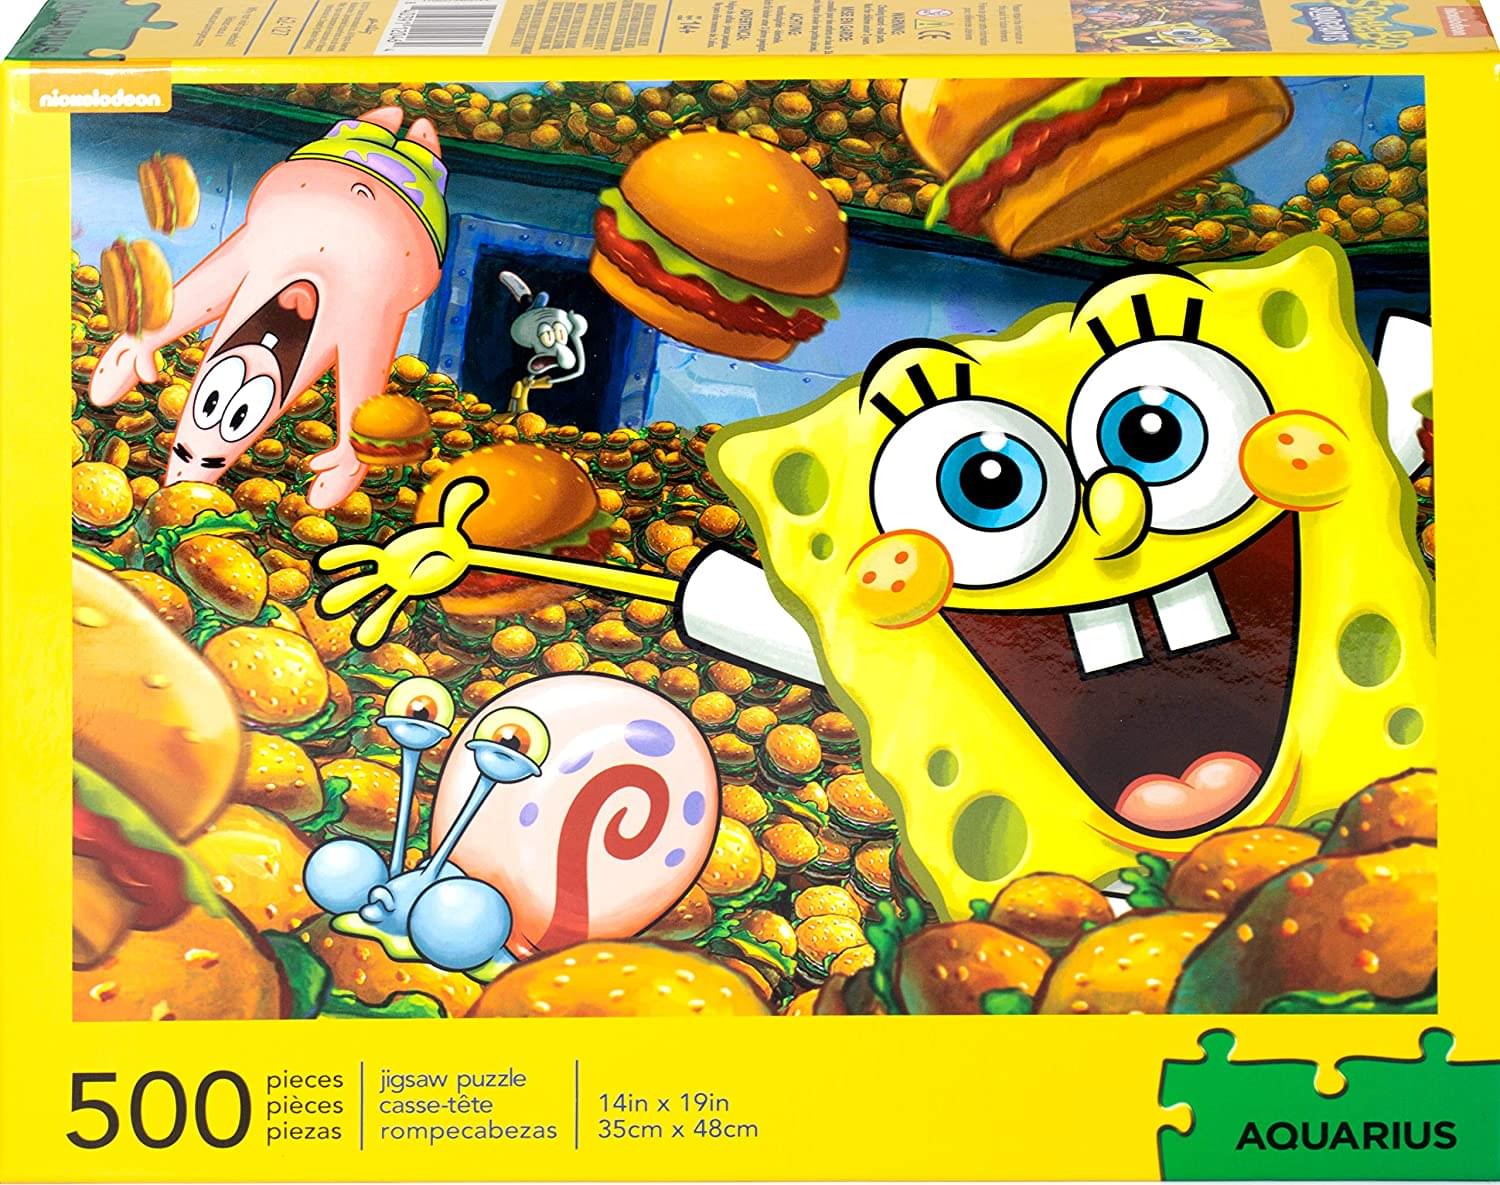 SpongeBob SquarePants 500 Piece Jigsaw Puzzle